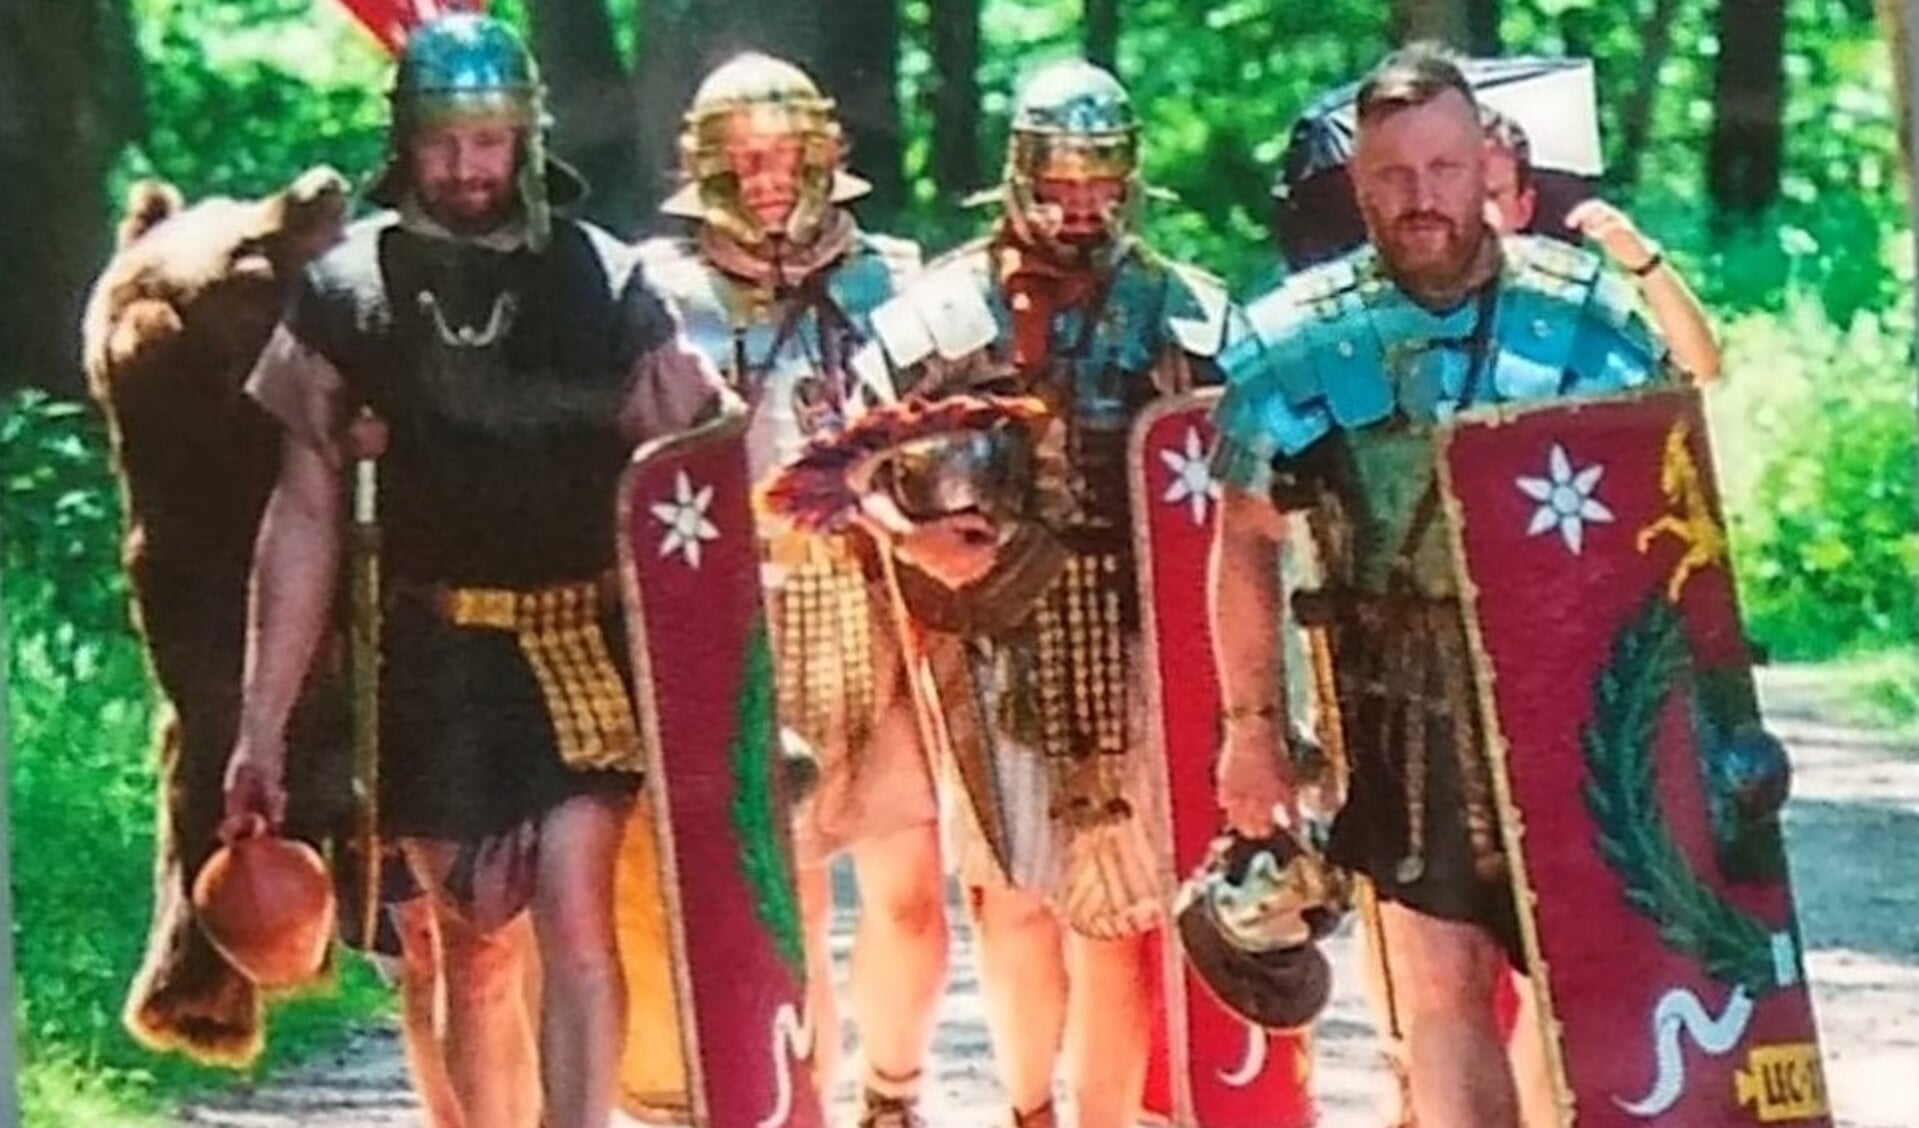 Romeinse legionairs (foto: Jeroen Savelkoul) 